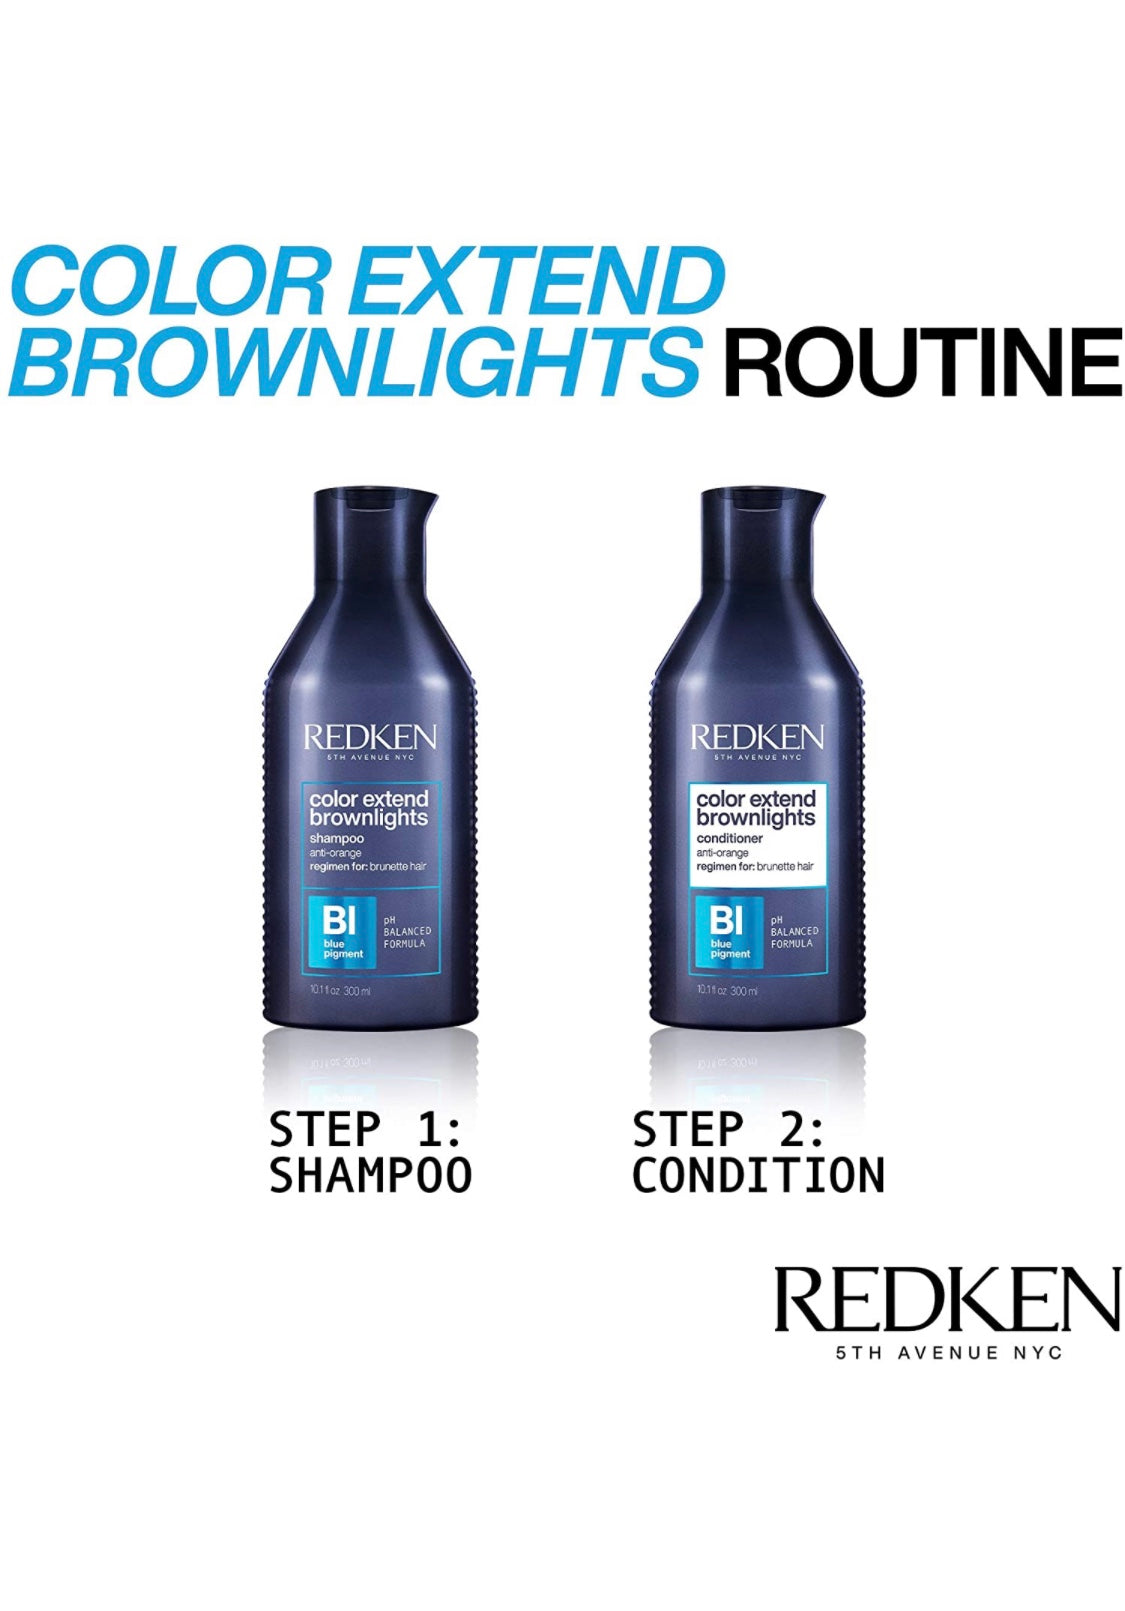 Redken - Color extend brownlights Bi 10.1 fl. oz./ 300 ml